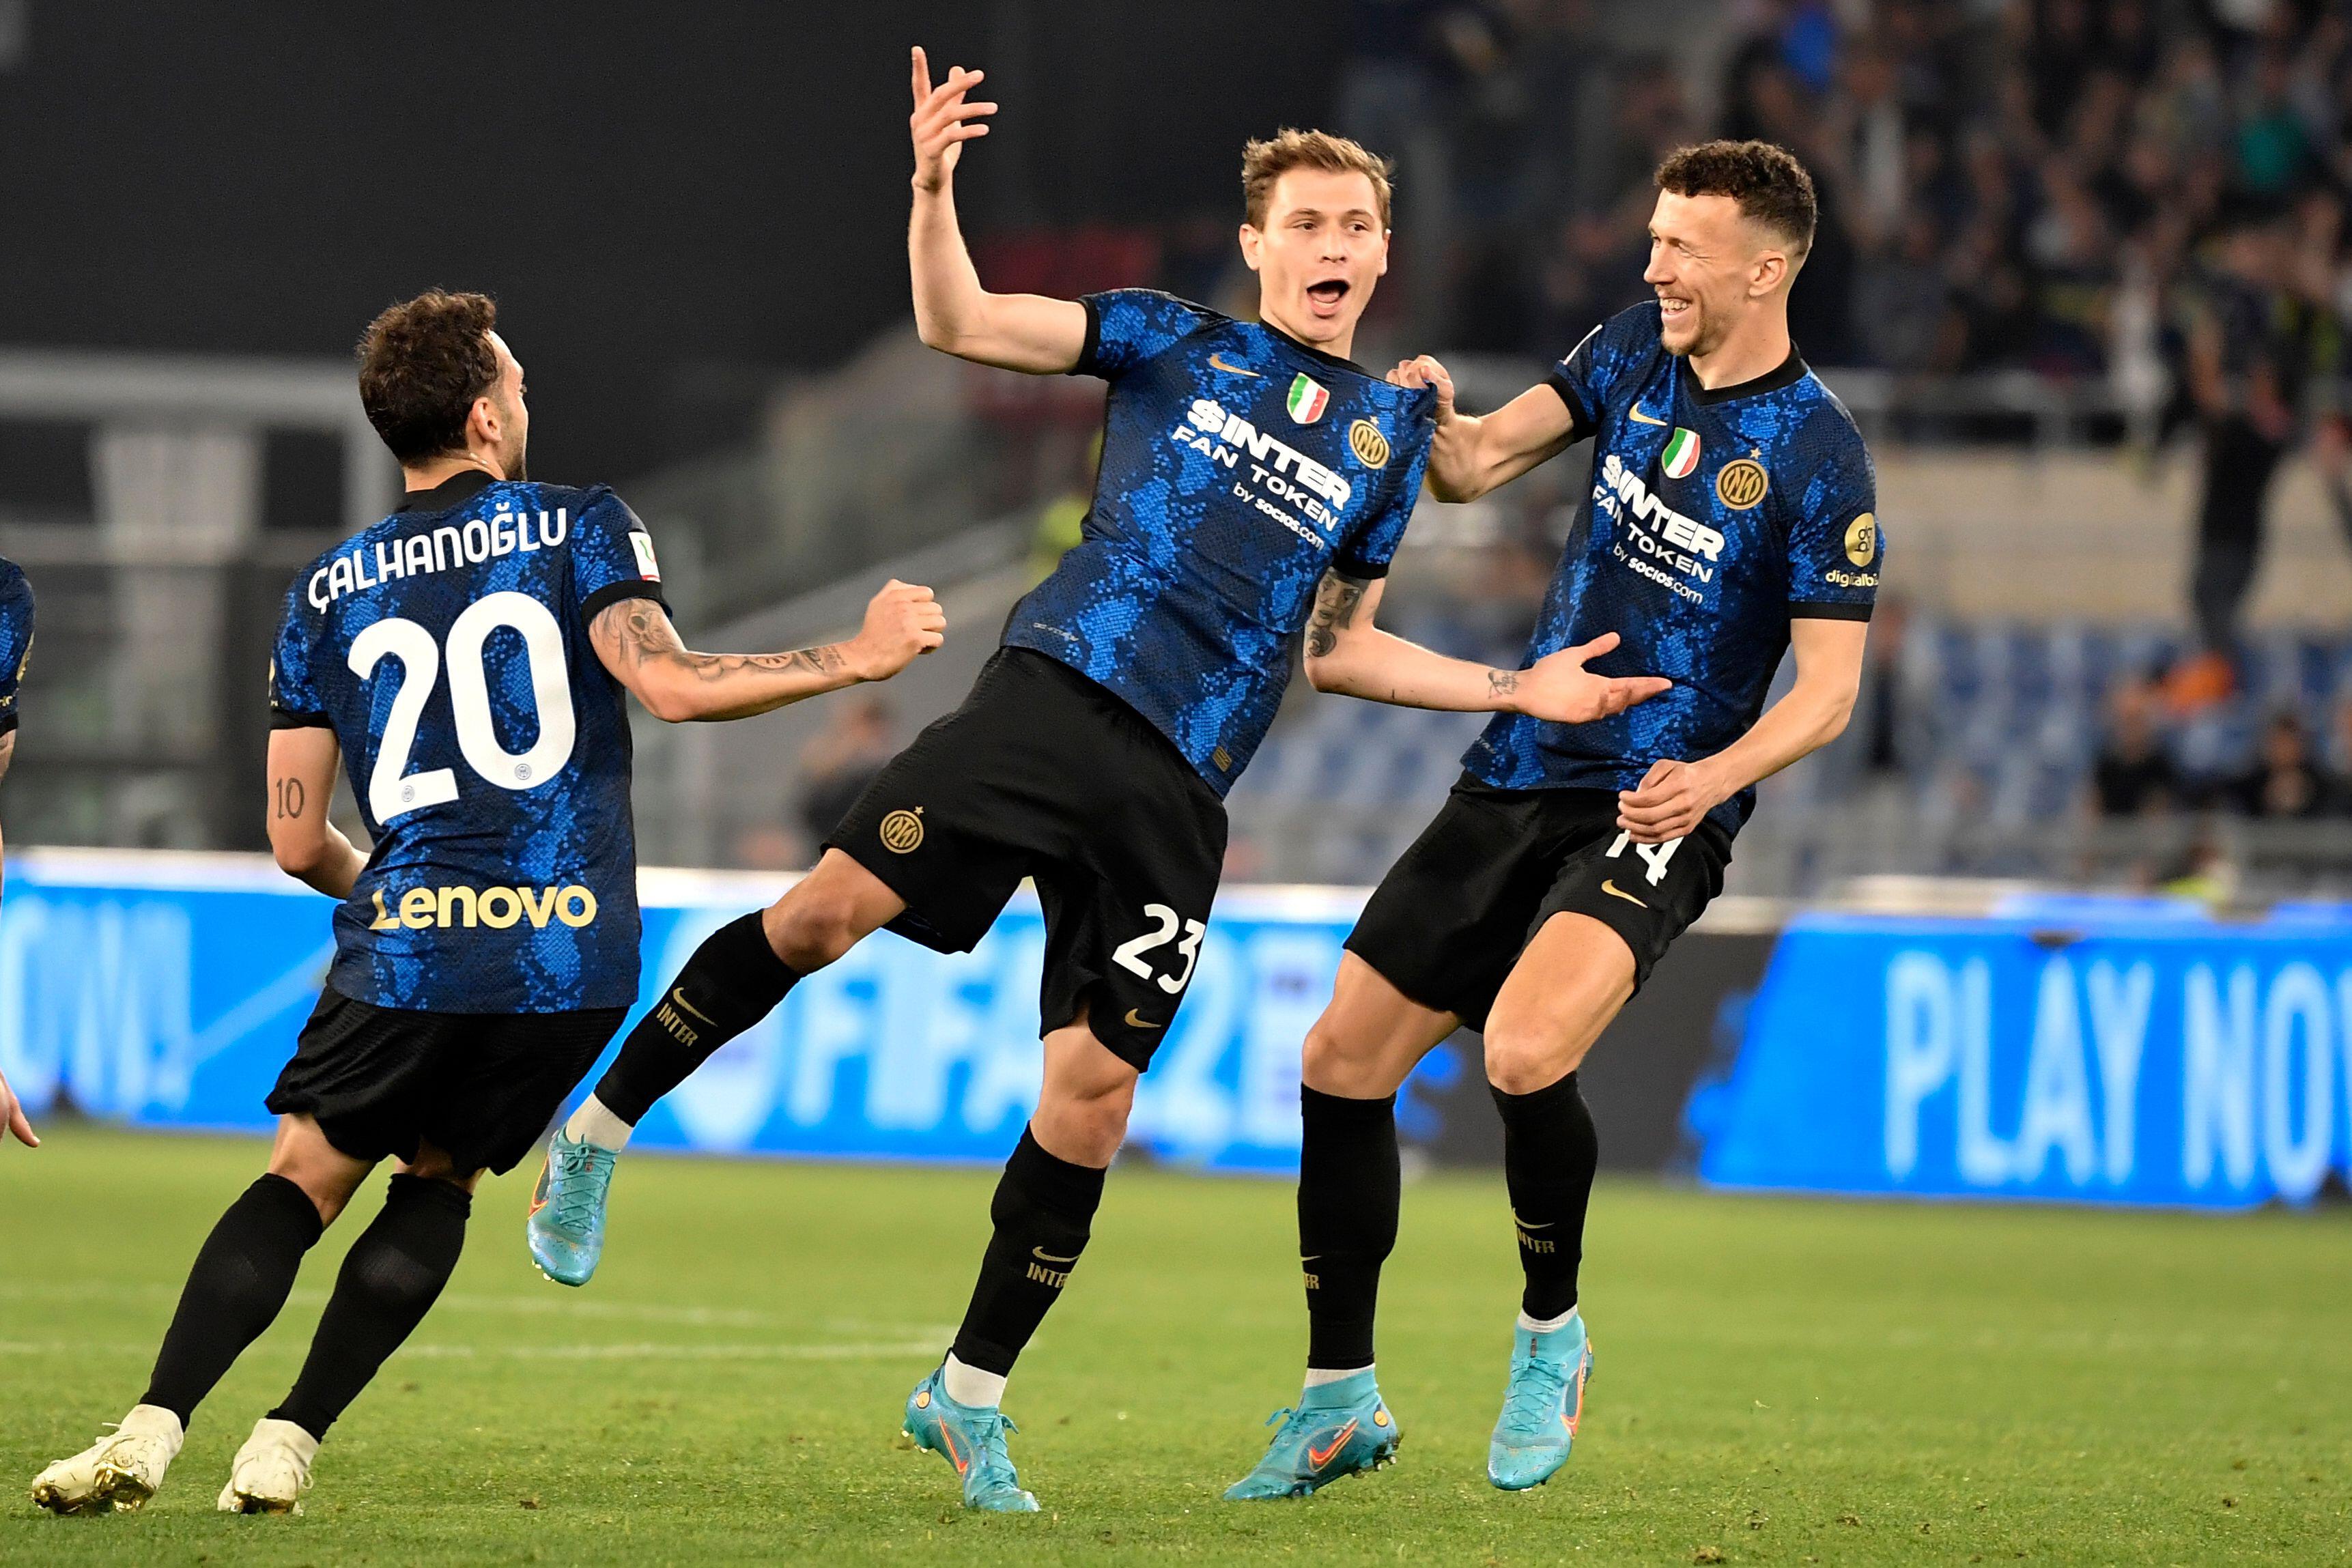 Coppa Italia Final: Inter Milan beat Juventus 4-2 to win COPPA ITALIA: Ivan Perisic scored an extra-time winner in a six-goal thriller, Watch Inter beat Juventus HIGHLIGHTS